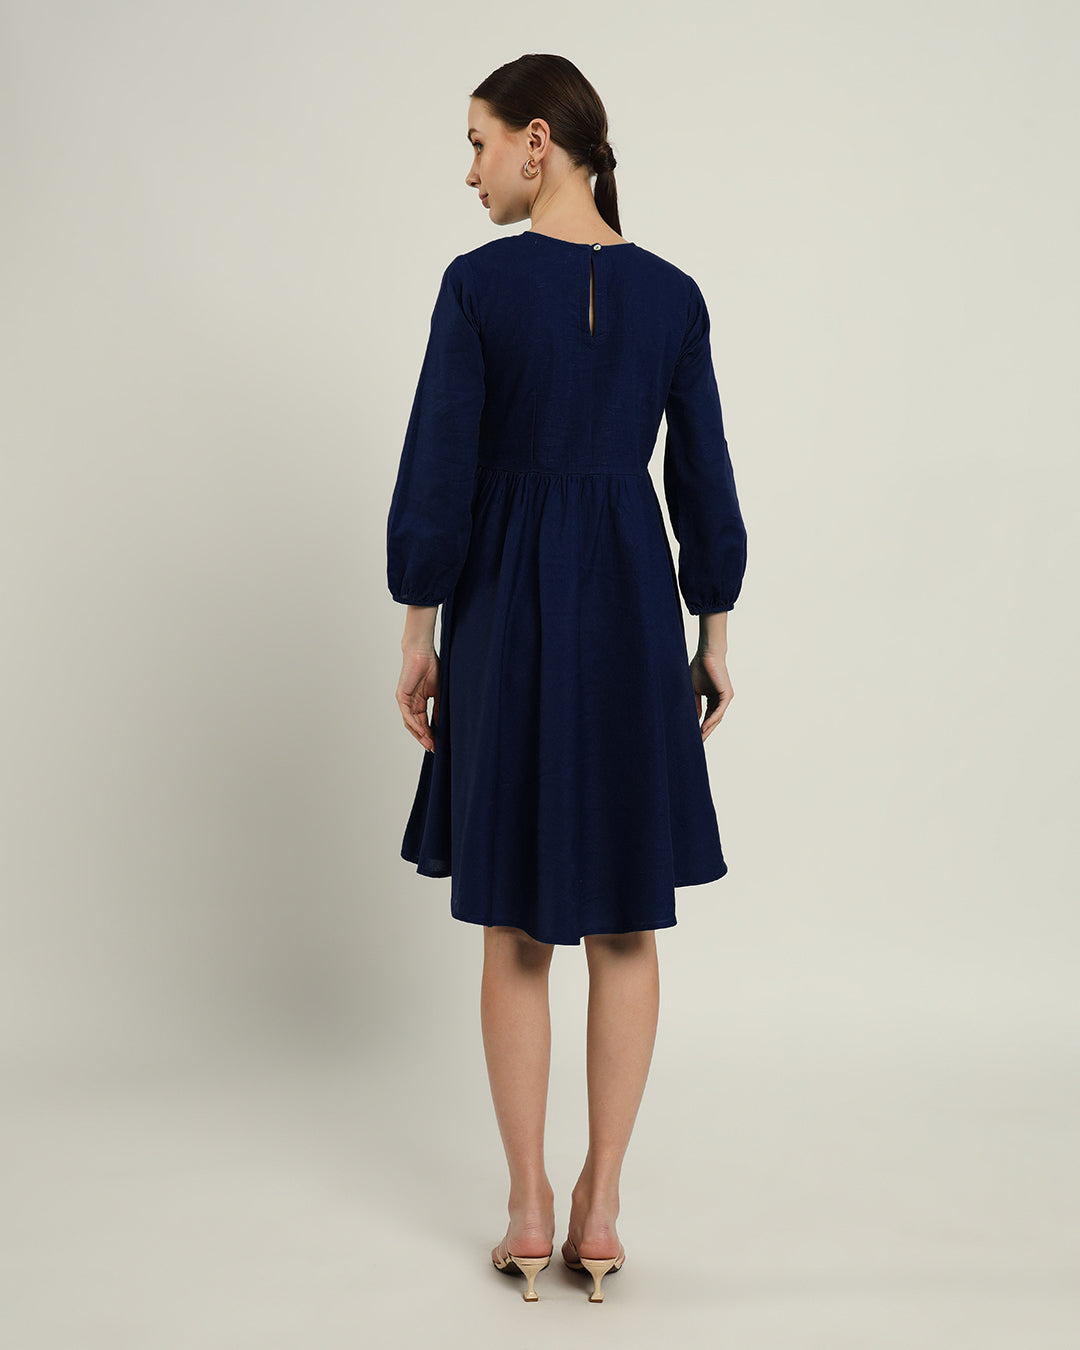 The Exeter Daisy Midnight Blue Linen Dress